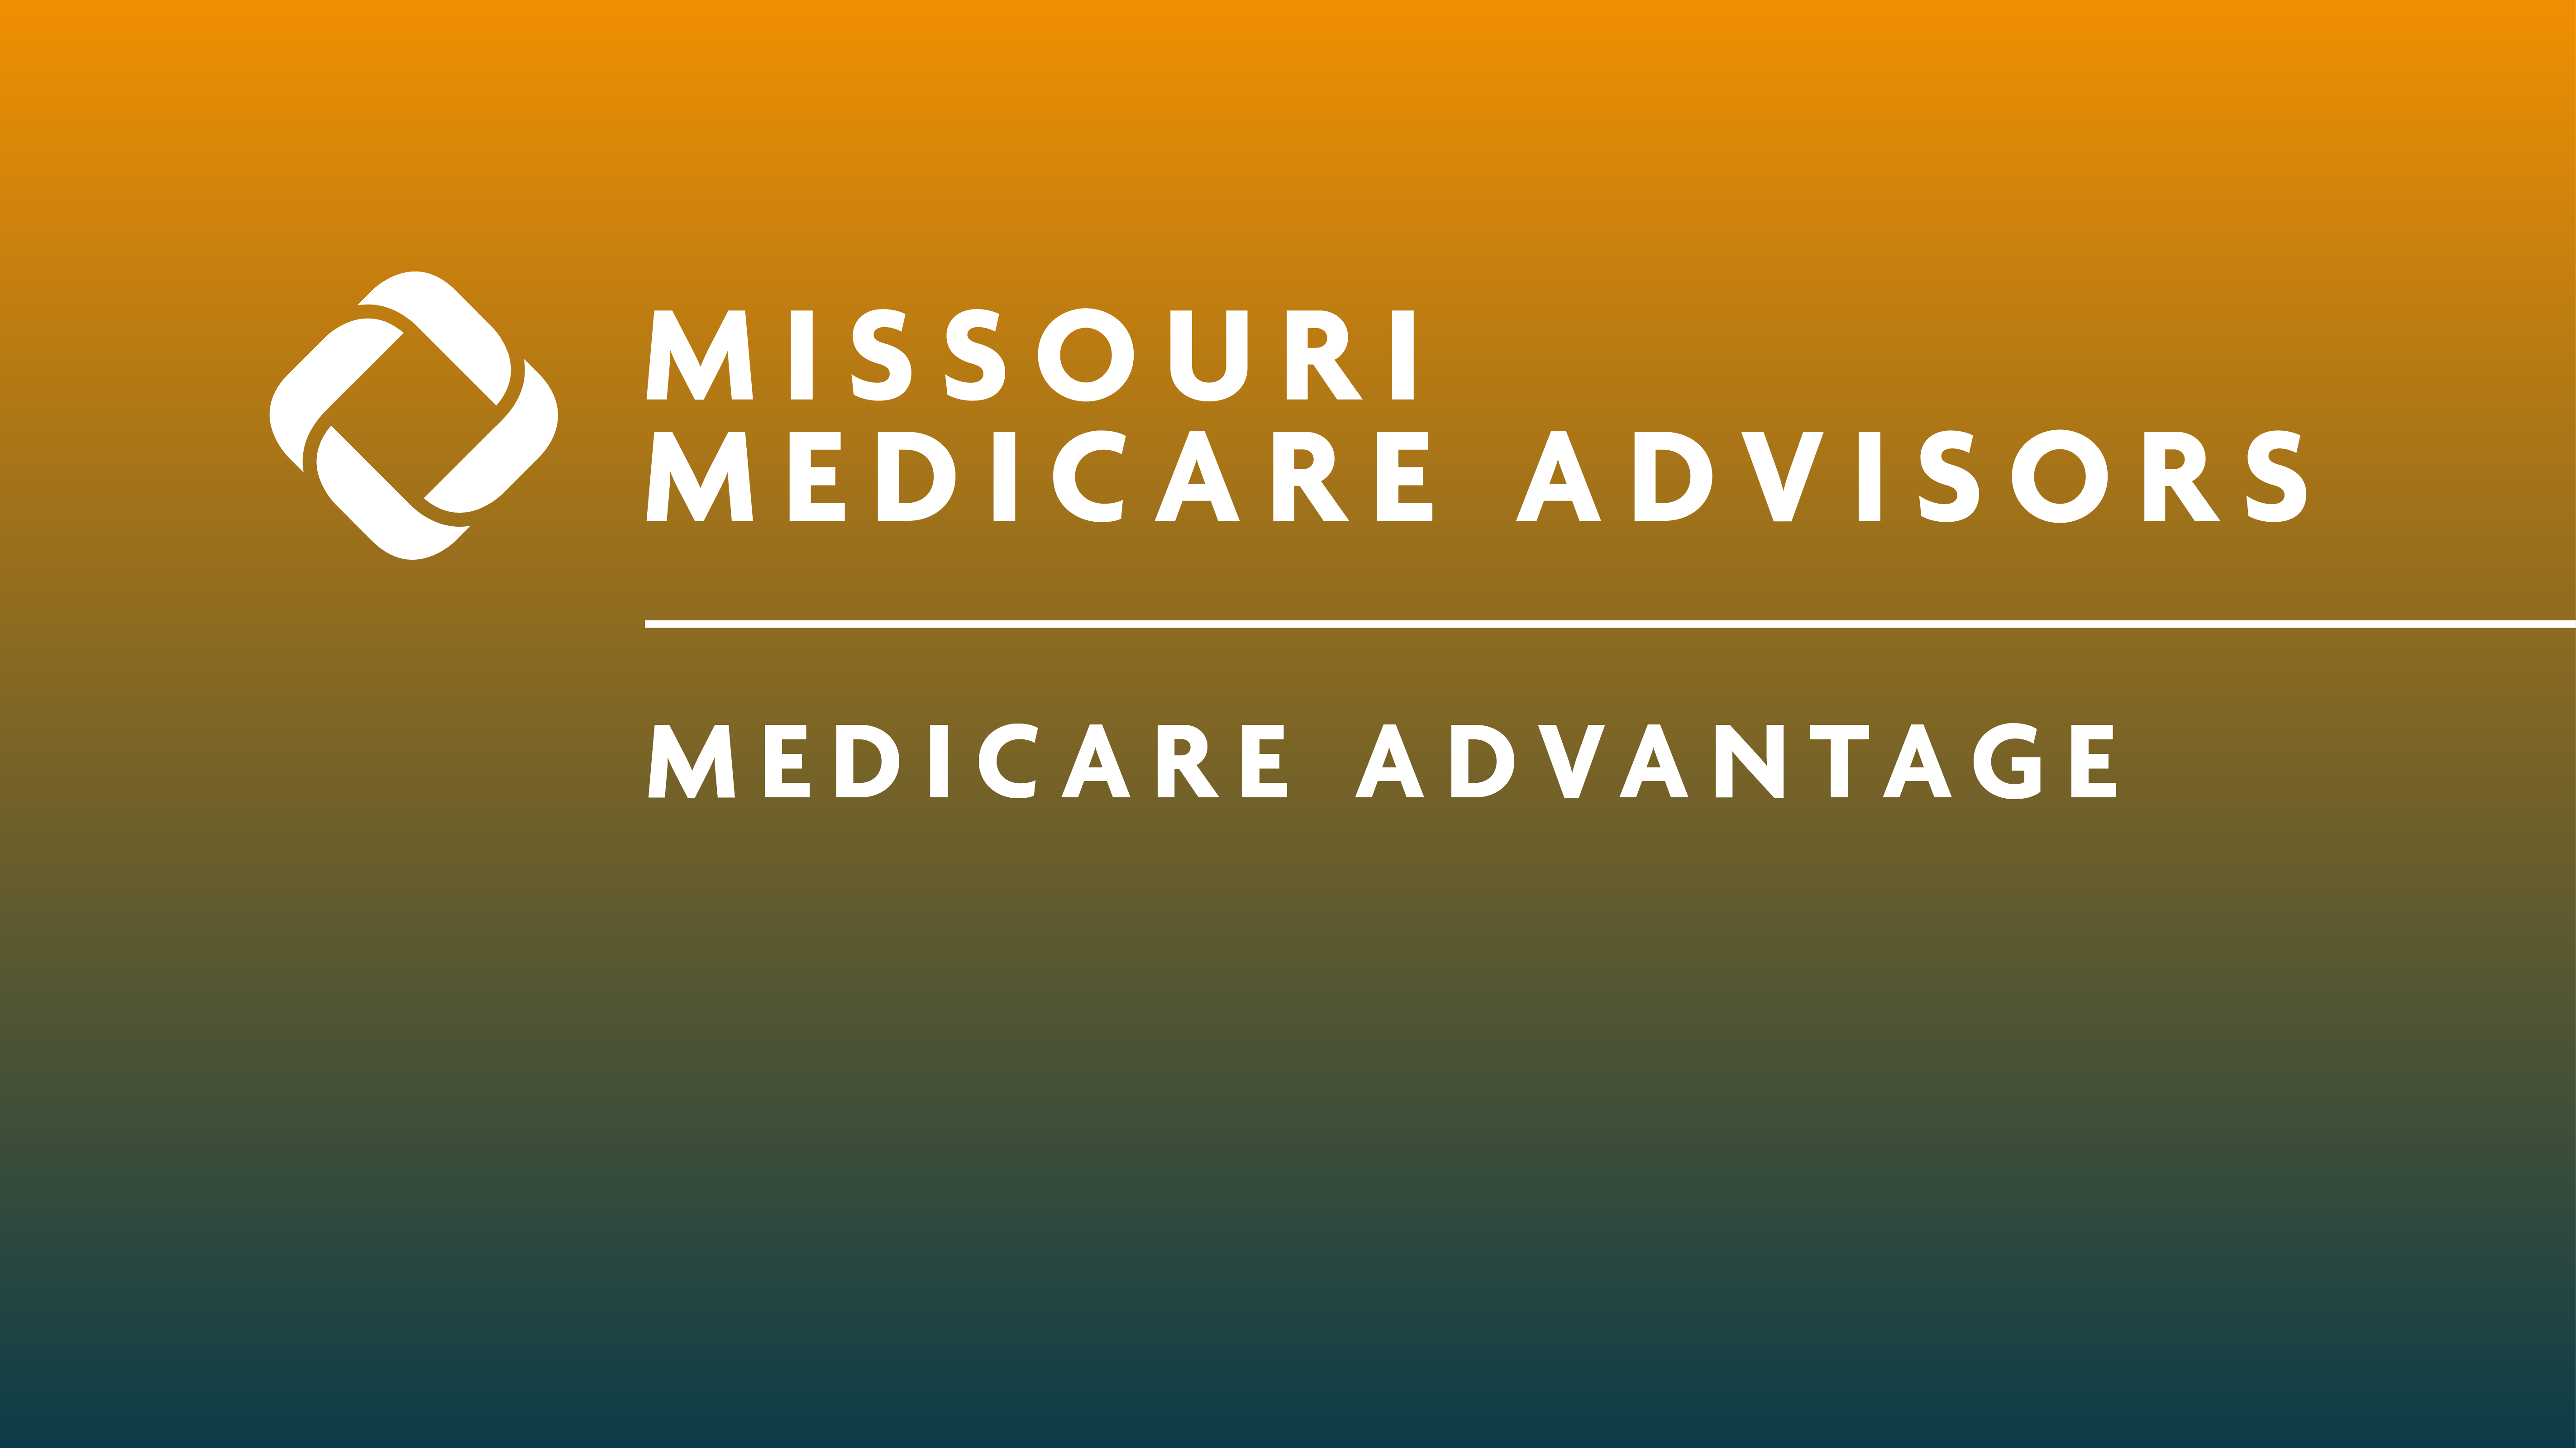 Missouri medicare advisors explains Medicare Advantage